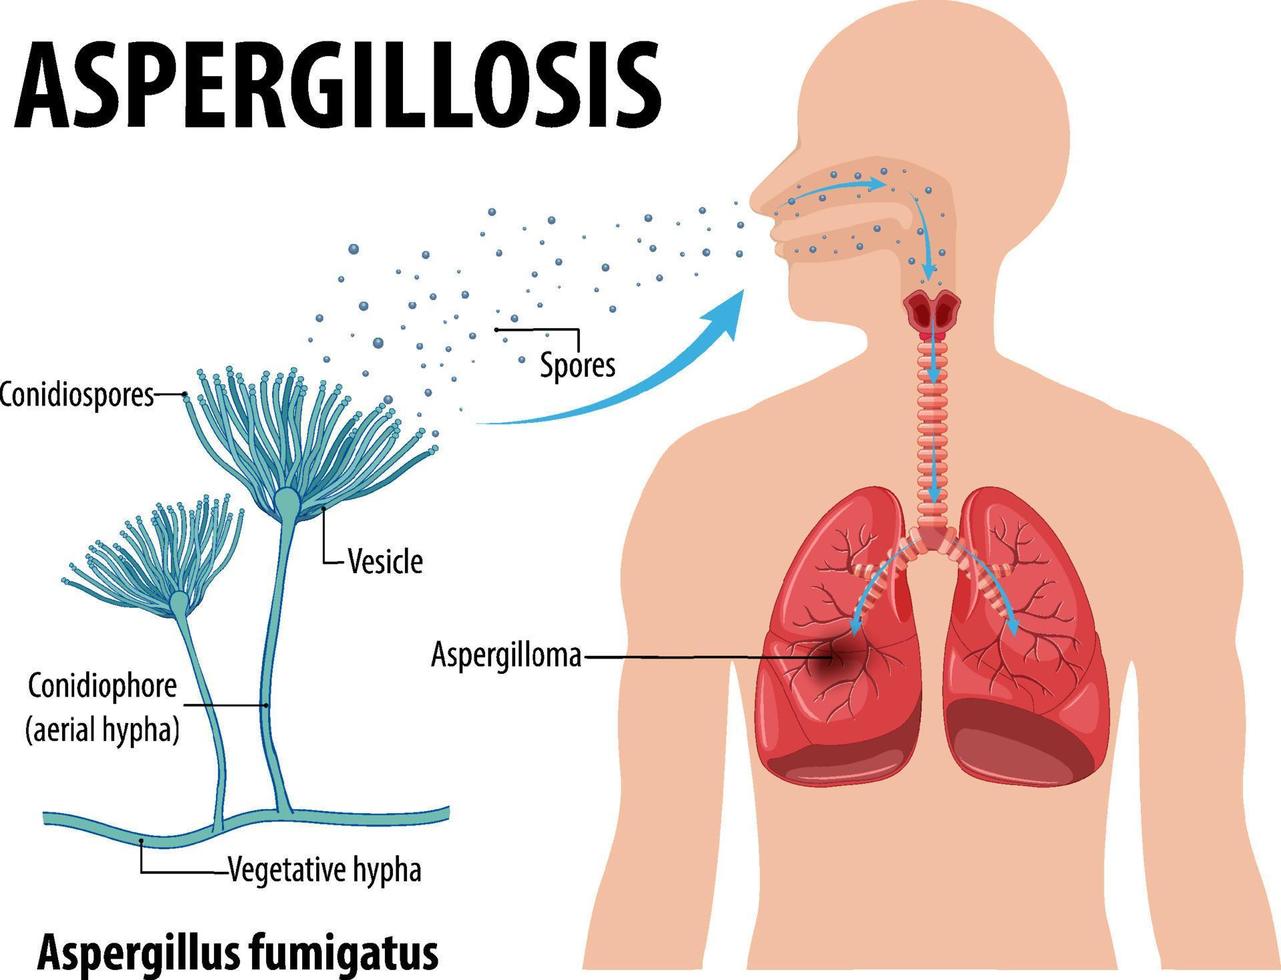 diagram met aspergillus-infectie vector